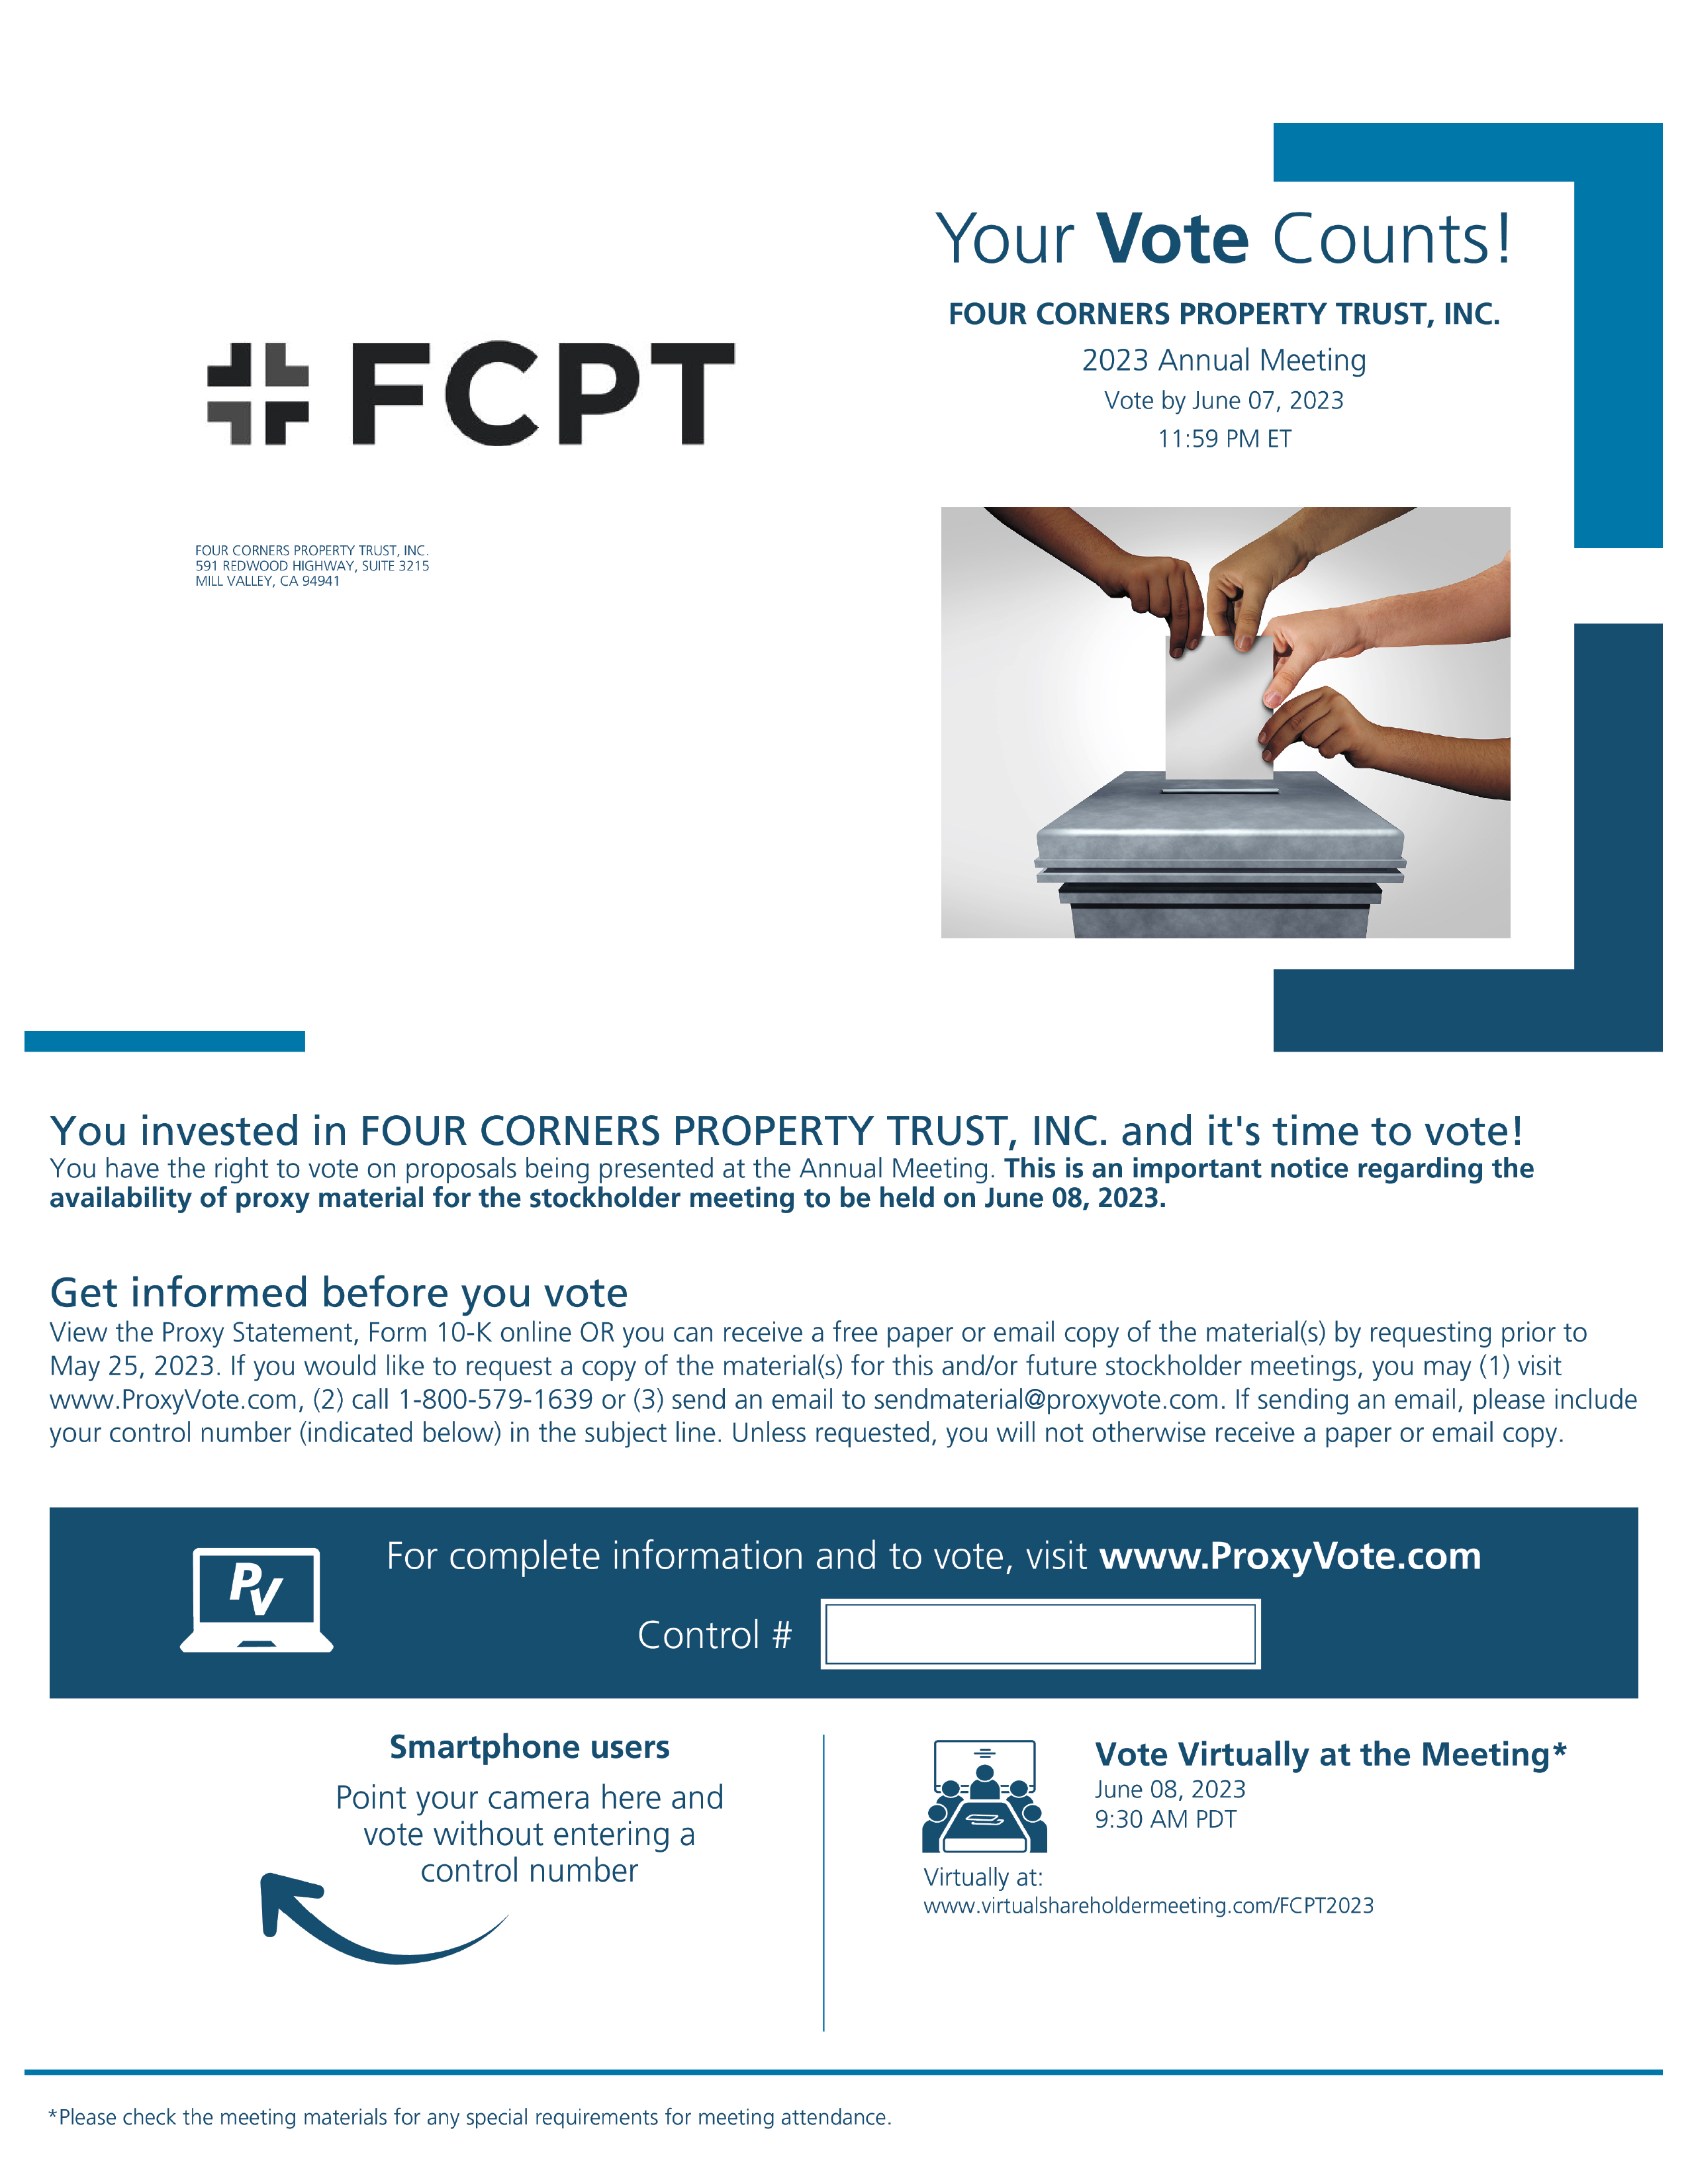 Four Corners Property Trust, Inc. (FormDEFA14A) - Four Corners Prop  (NYSE:FCPT) - Benzinga